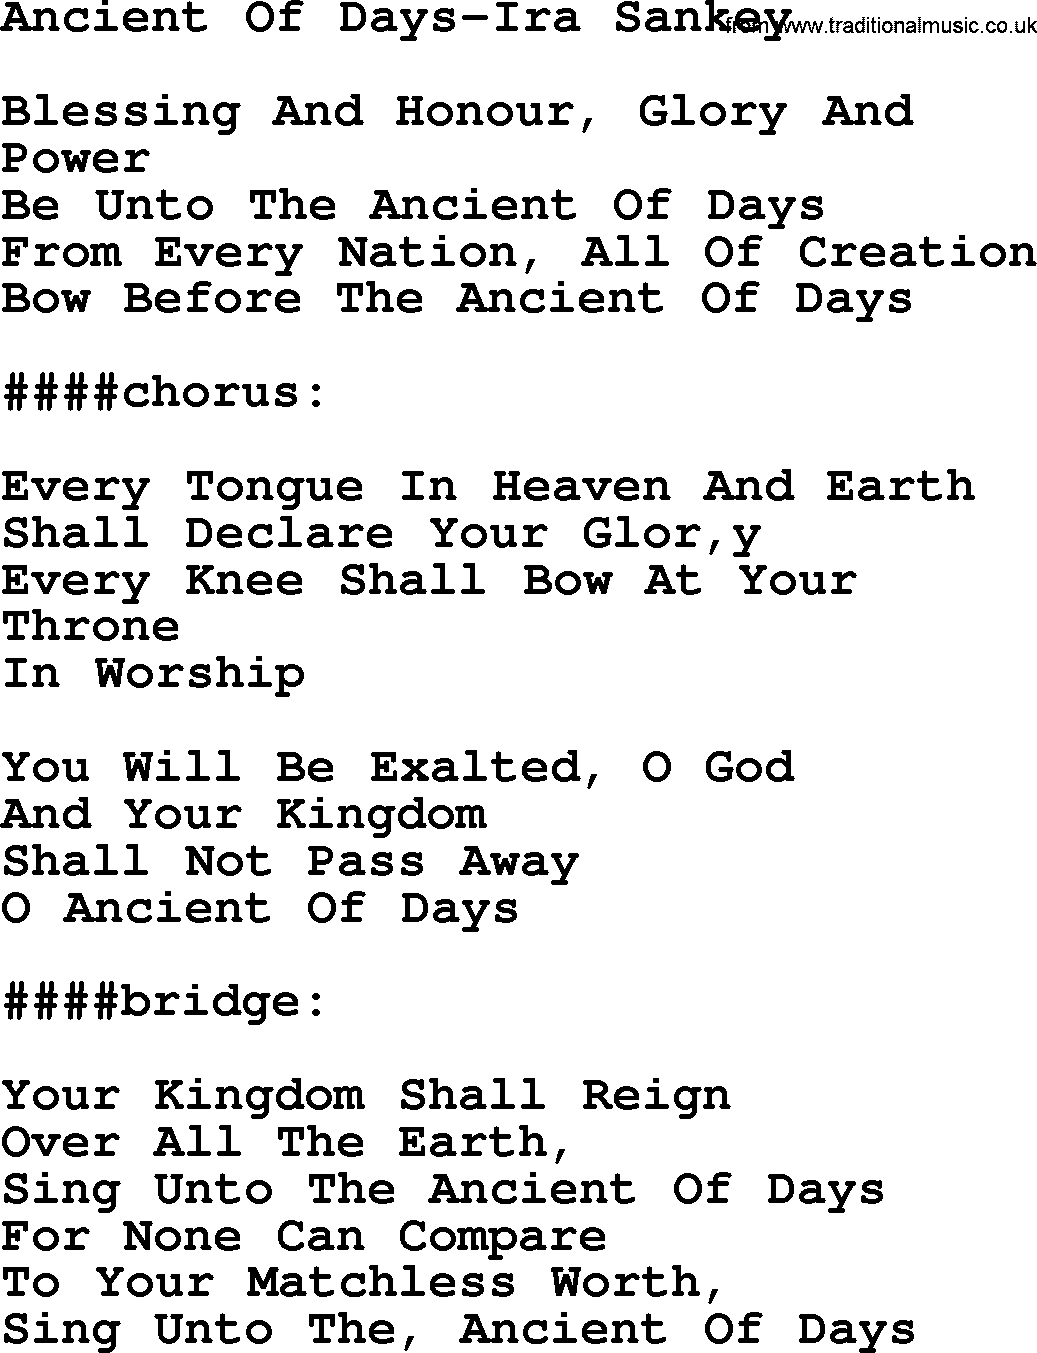 Ira Sankey hymn: Ancient Of Days-Ira Sankey, lyrics